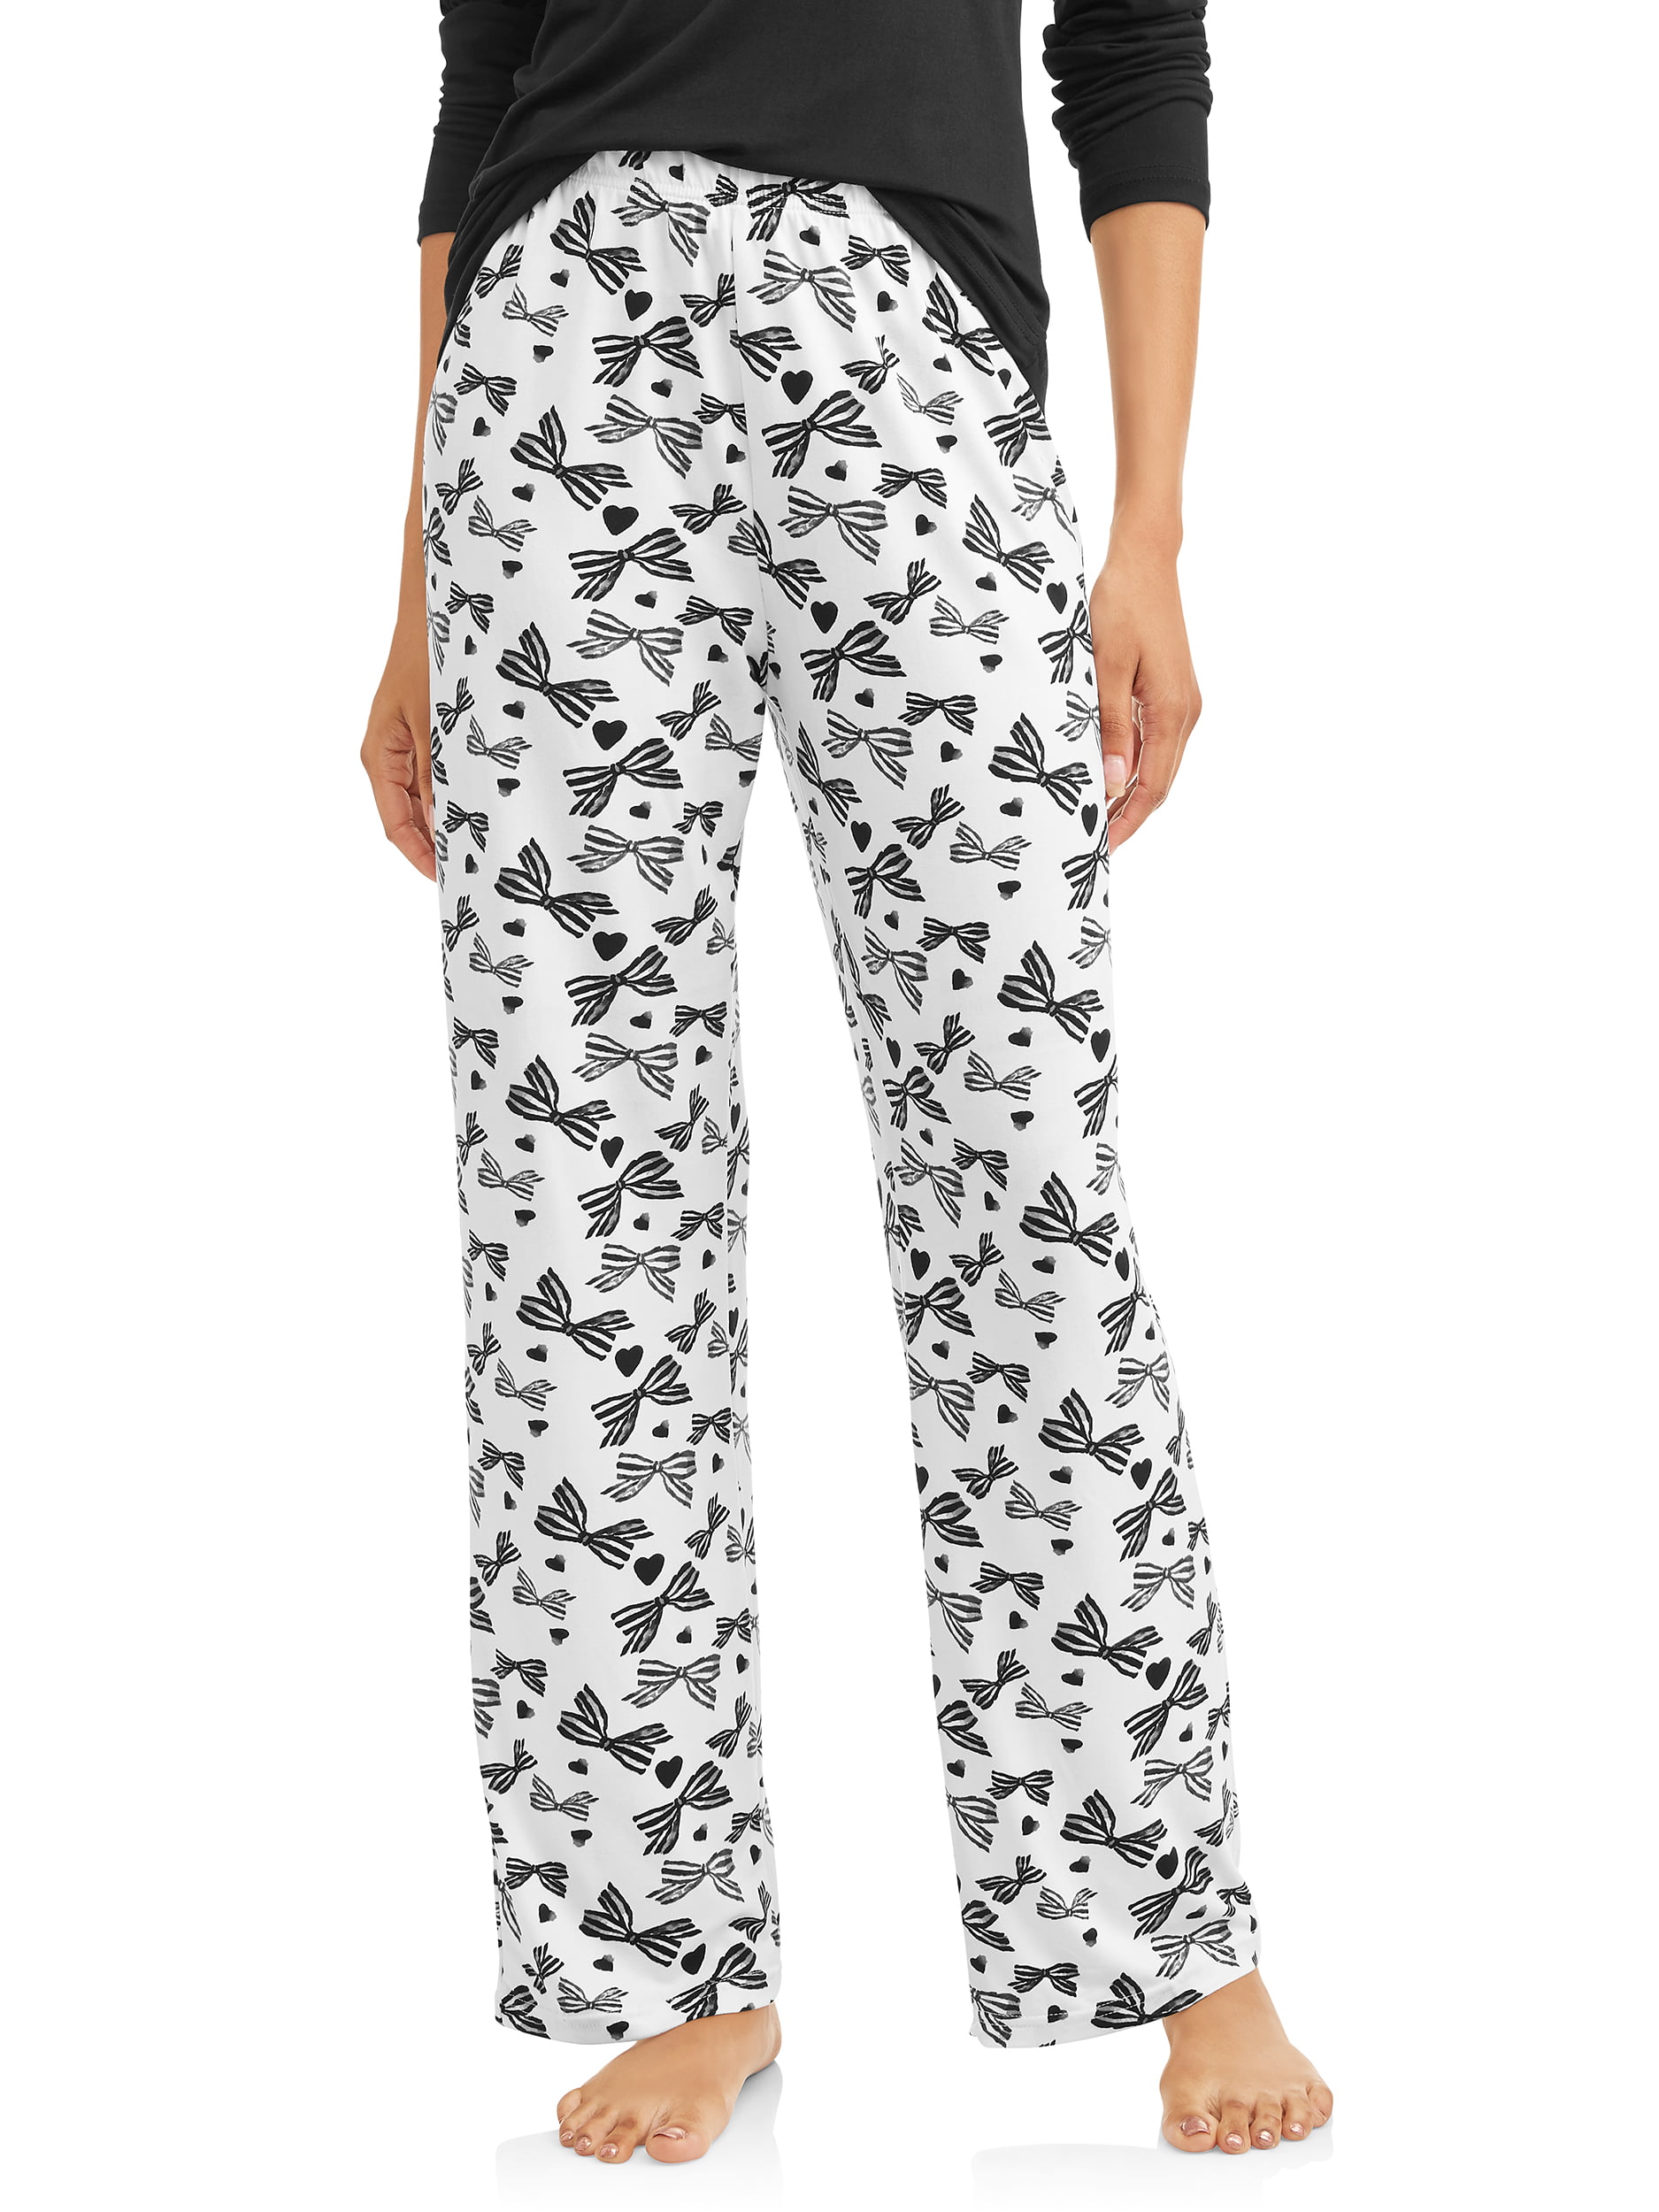 MAYFAIR LADIES LOUNGE Pajama Pants 2X cotton-poly white pink & yellow  pineapples £16.56 - PicClick UK